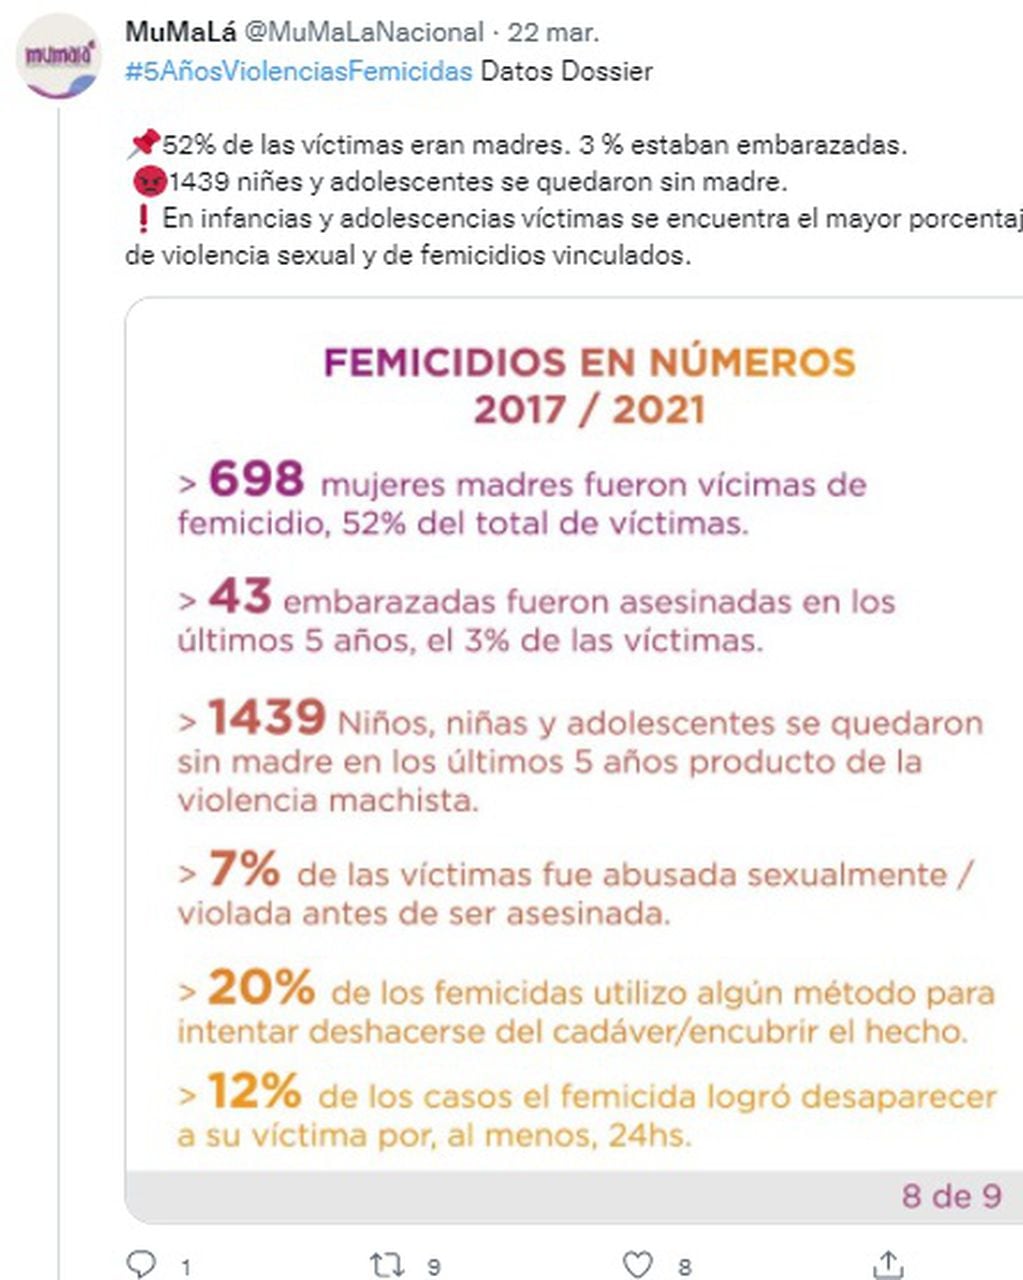 Mumalá en Twitter: informe de femicidios 2017-2021